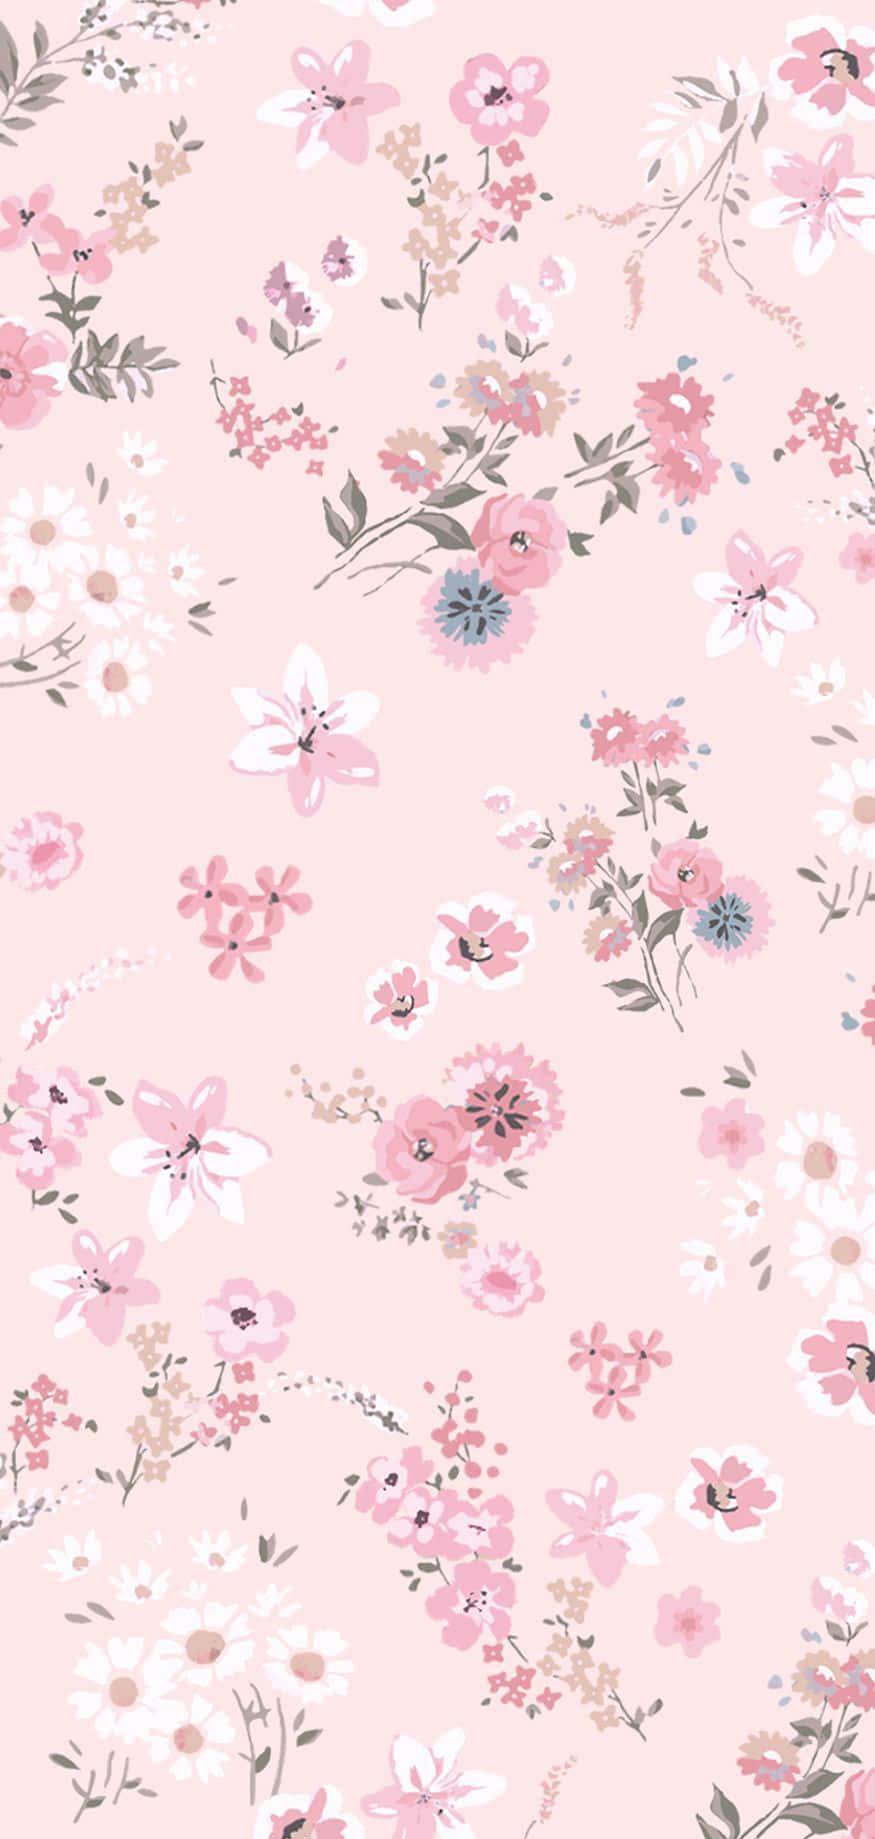  Cute Iphone Flower Wallpapers